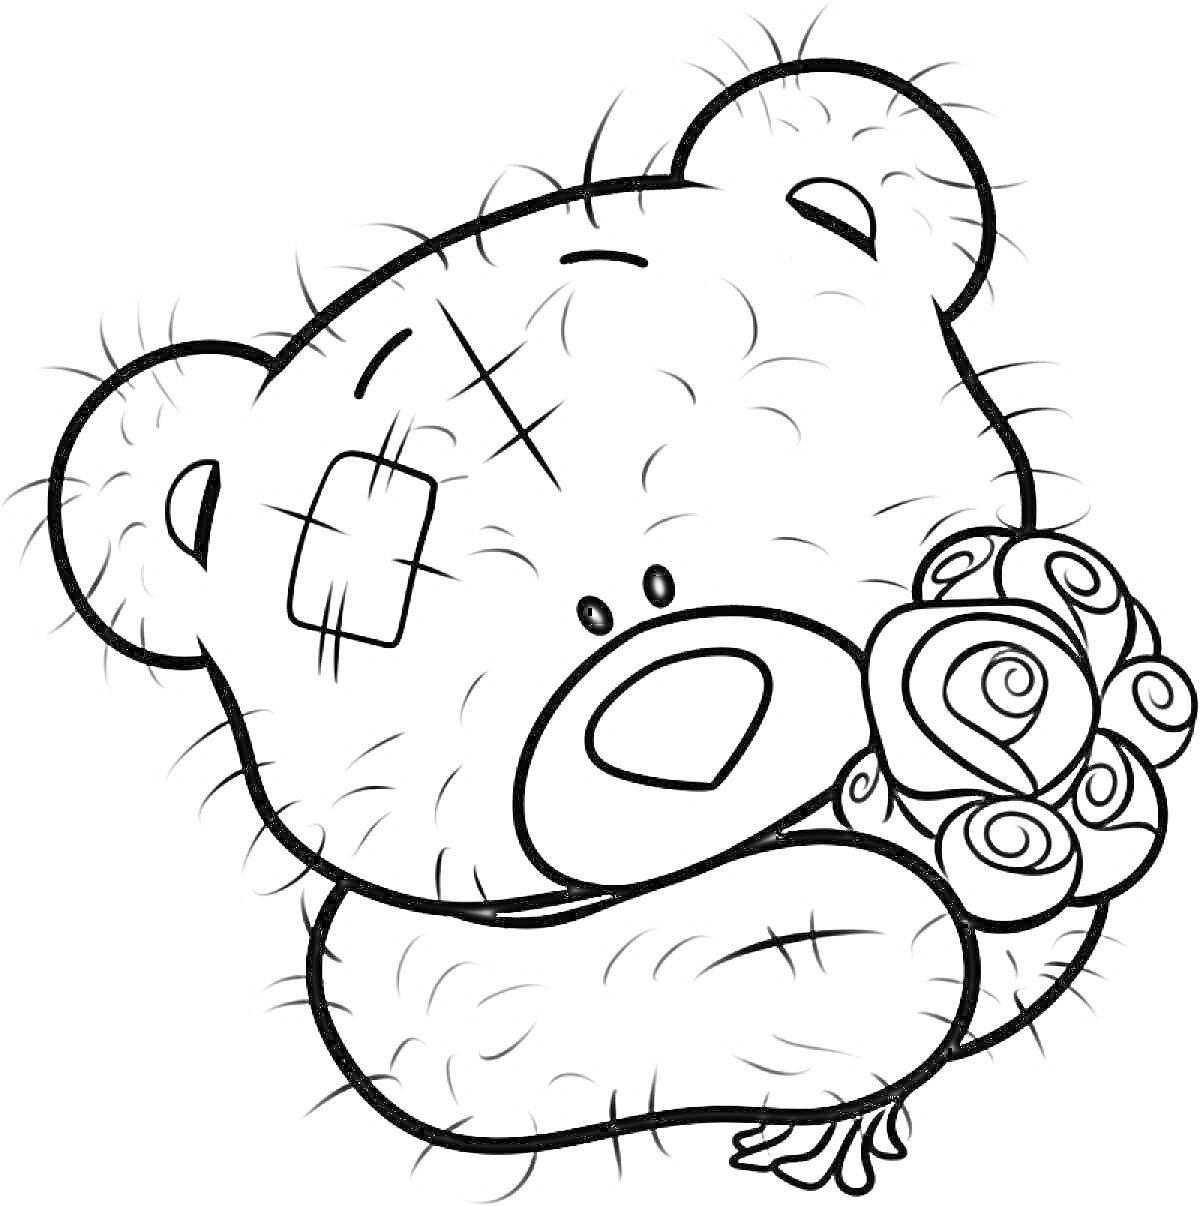 Раскраска Мишка с букетом цветов и заплаткой на голове